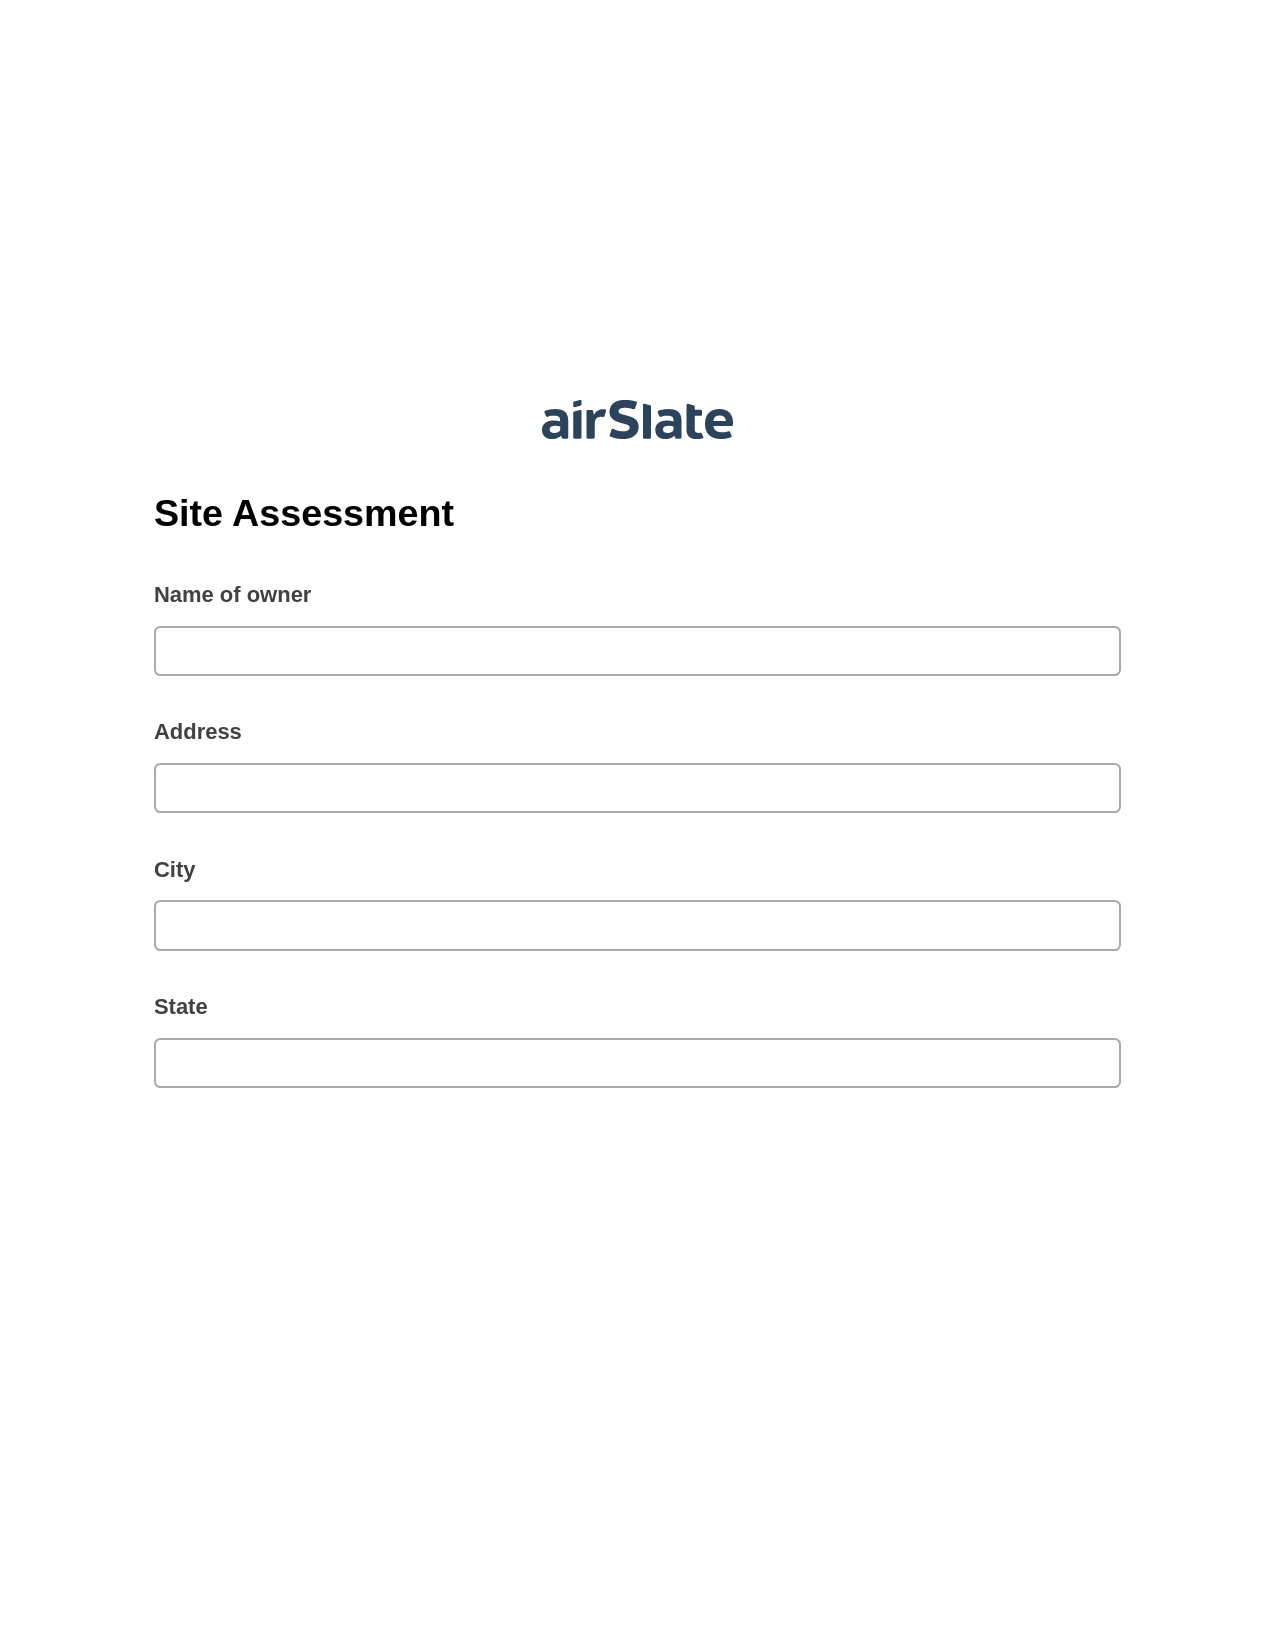 Multirole Site Assessment Pre-fill from CSV File Bot, Audit Trail Bot, Box Bot